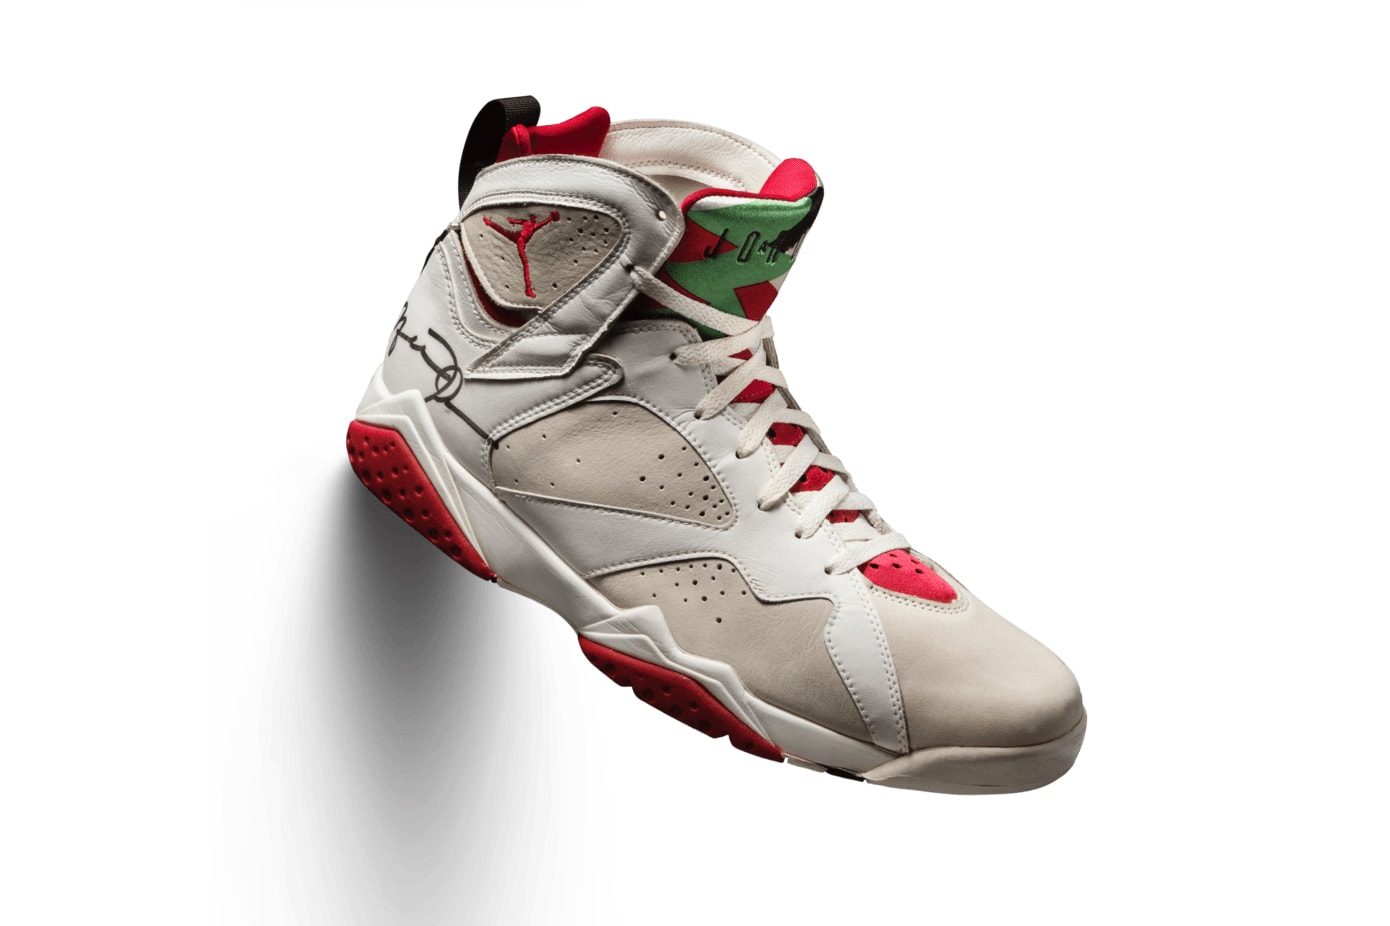 Jordan Brand 打造「Air Jordan Collection」網站回顧歷代球鞋設計